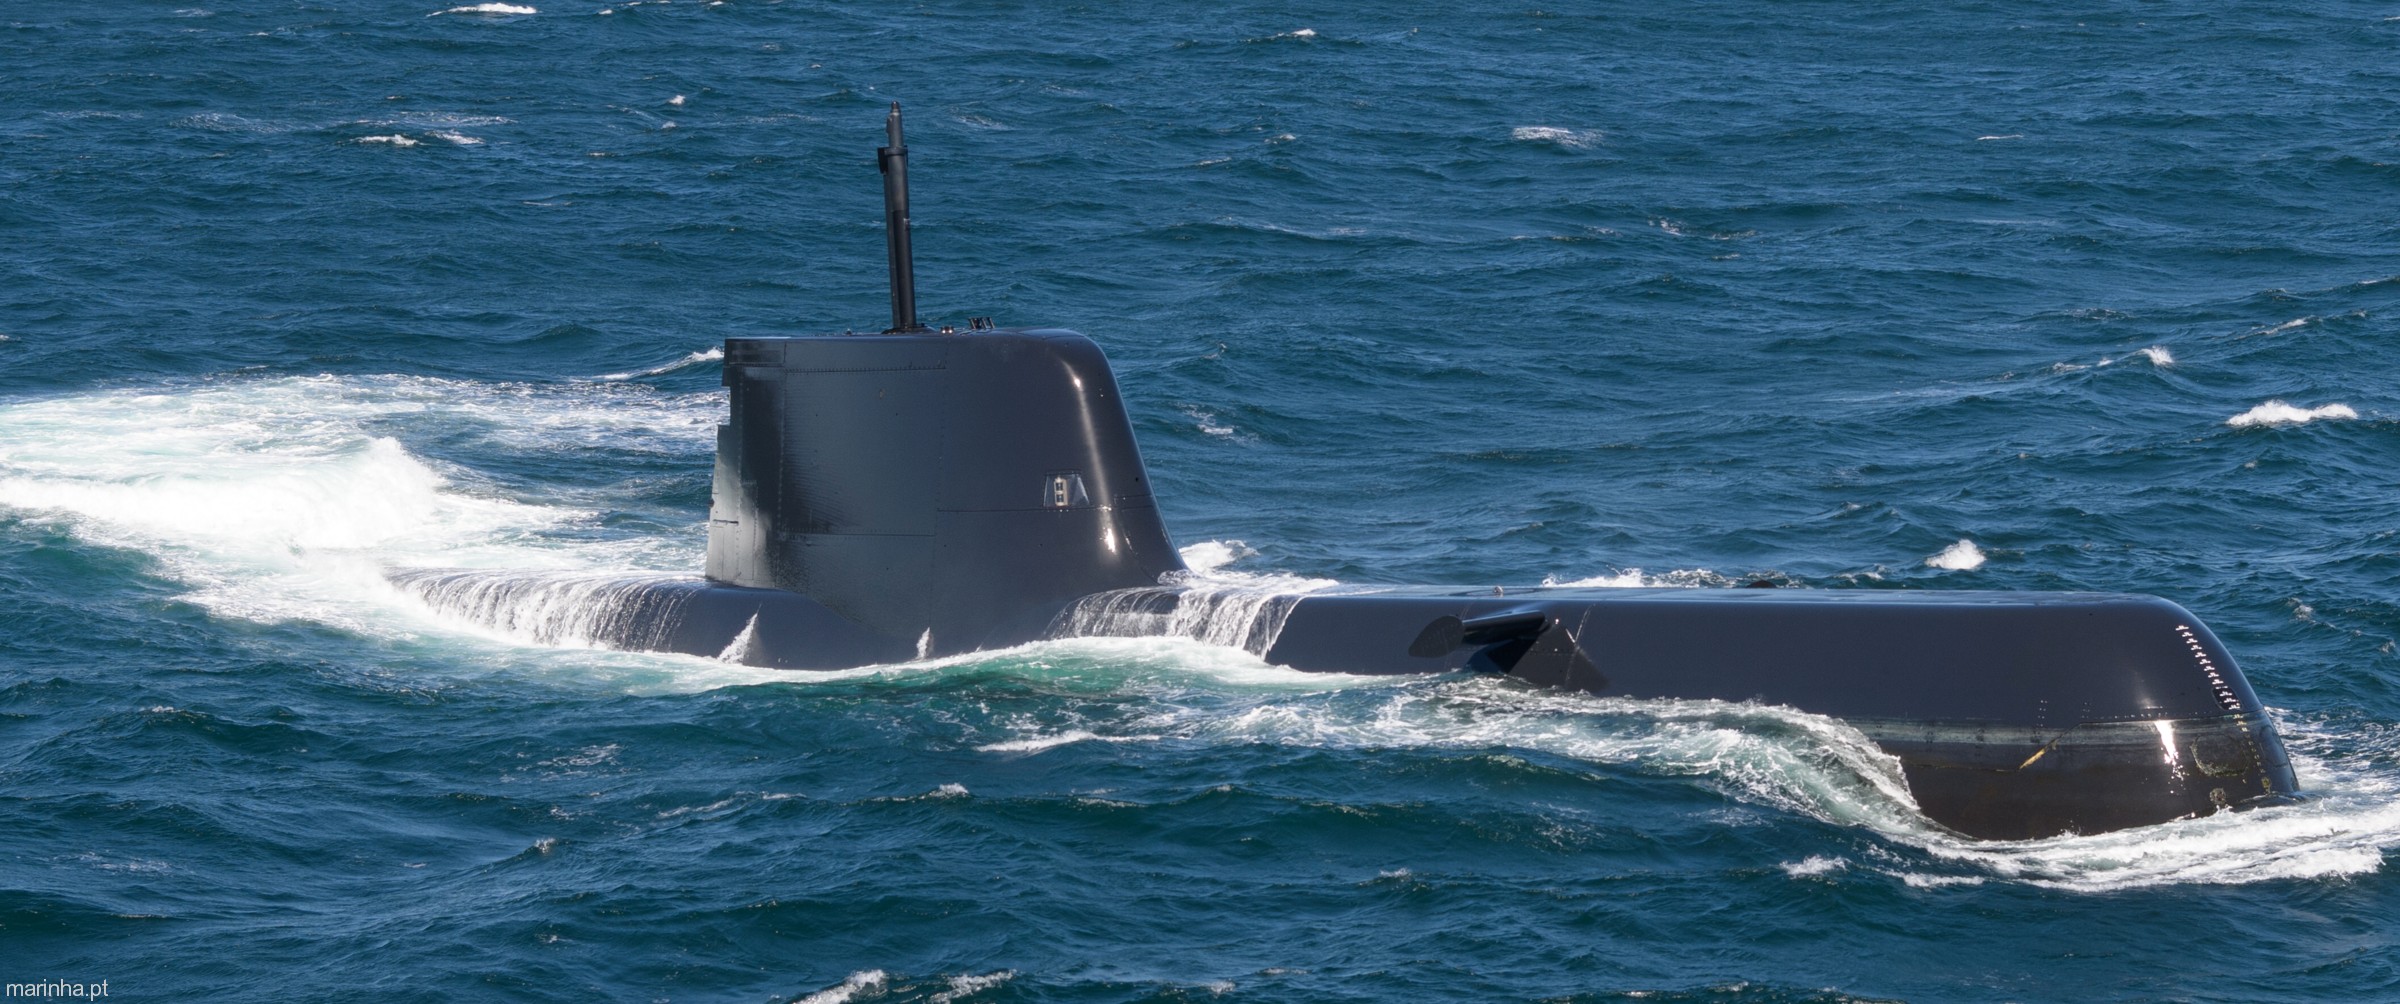 s-161 nrp arpao tridente class type 209pn attack submarine ssk aip portuguese navy marinha 06